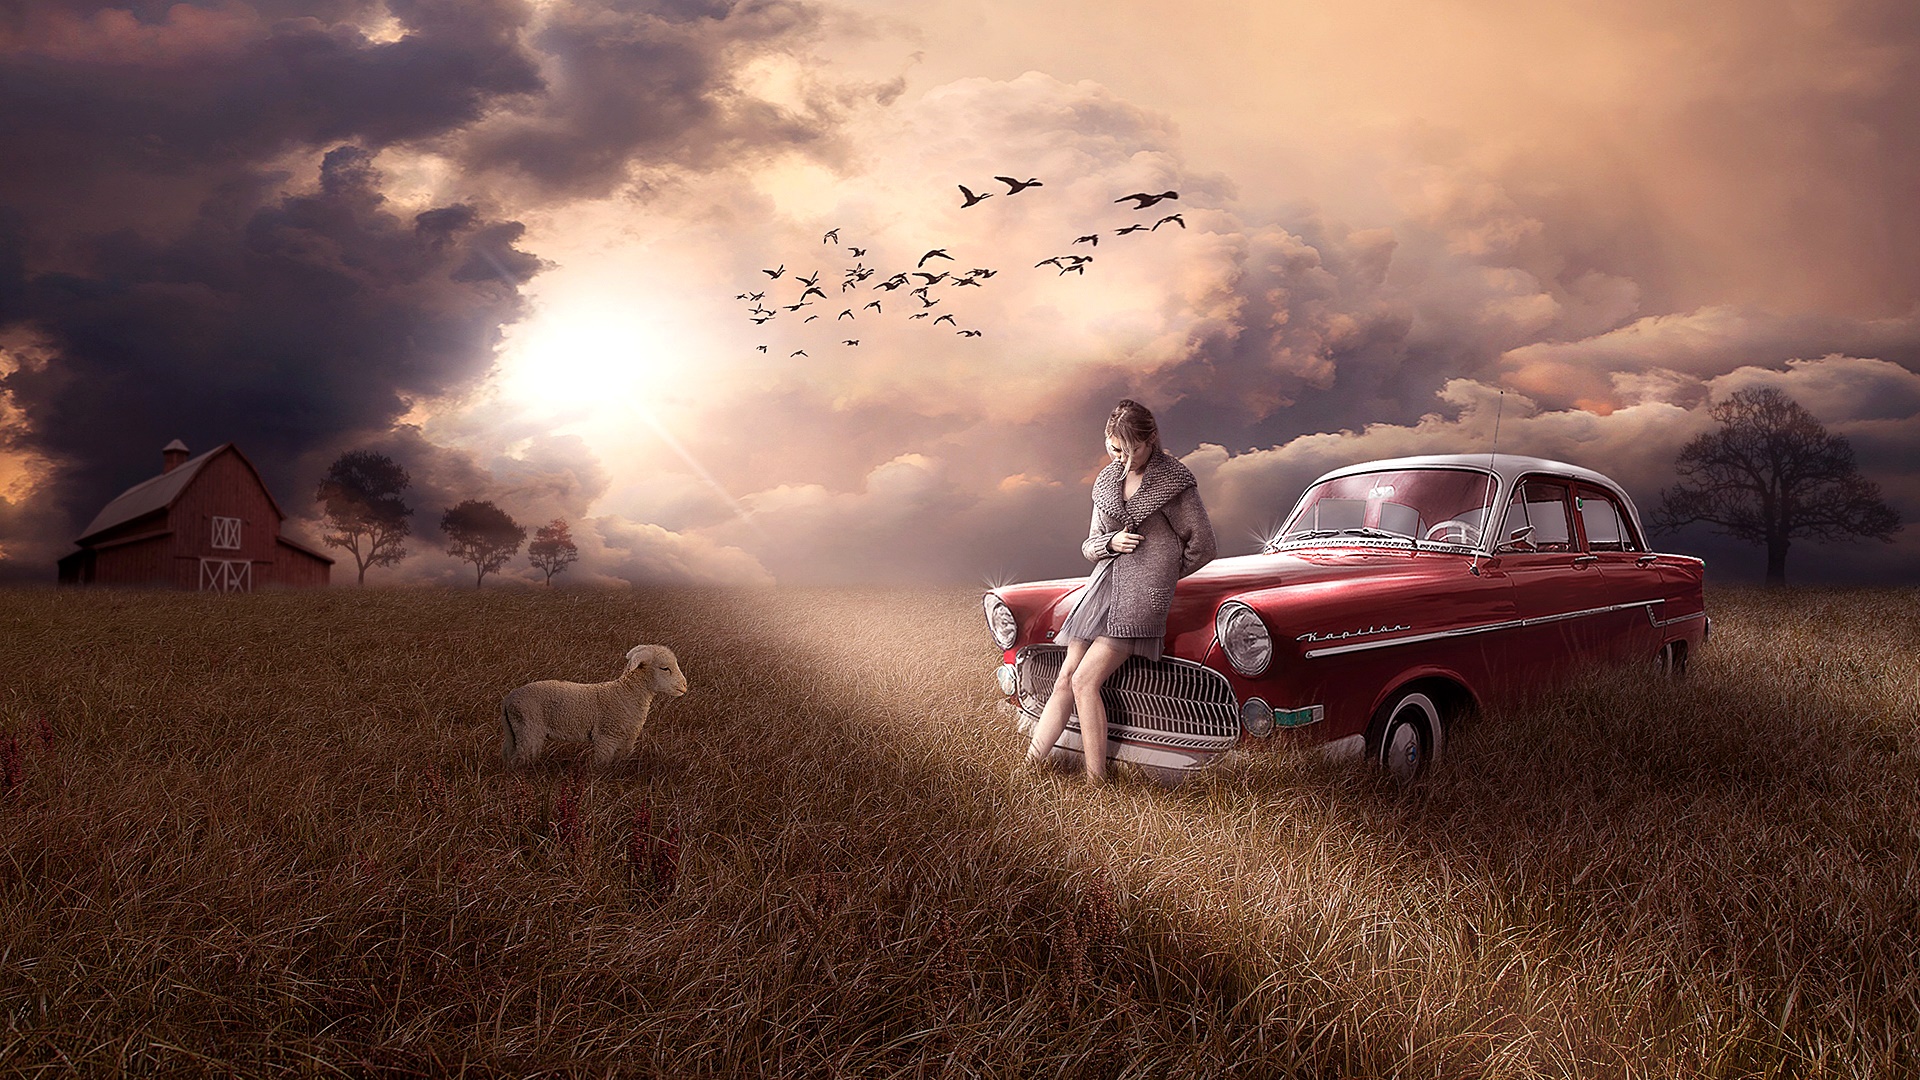 Windows Backgrounds fantasy, women, car, field, lamb, sad